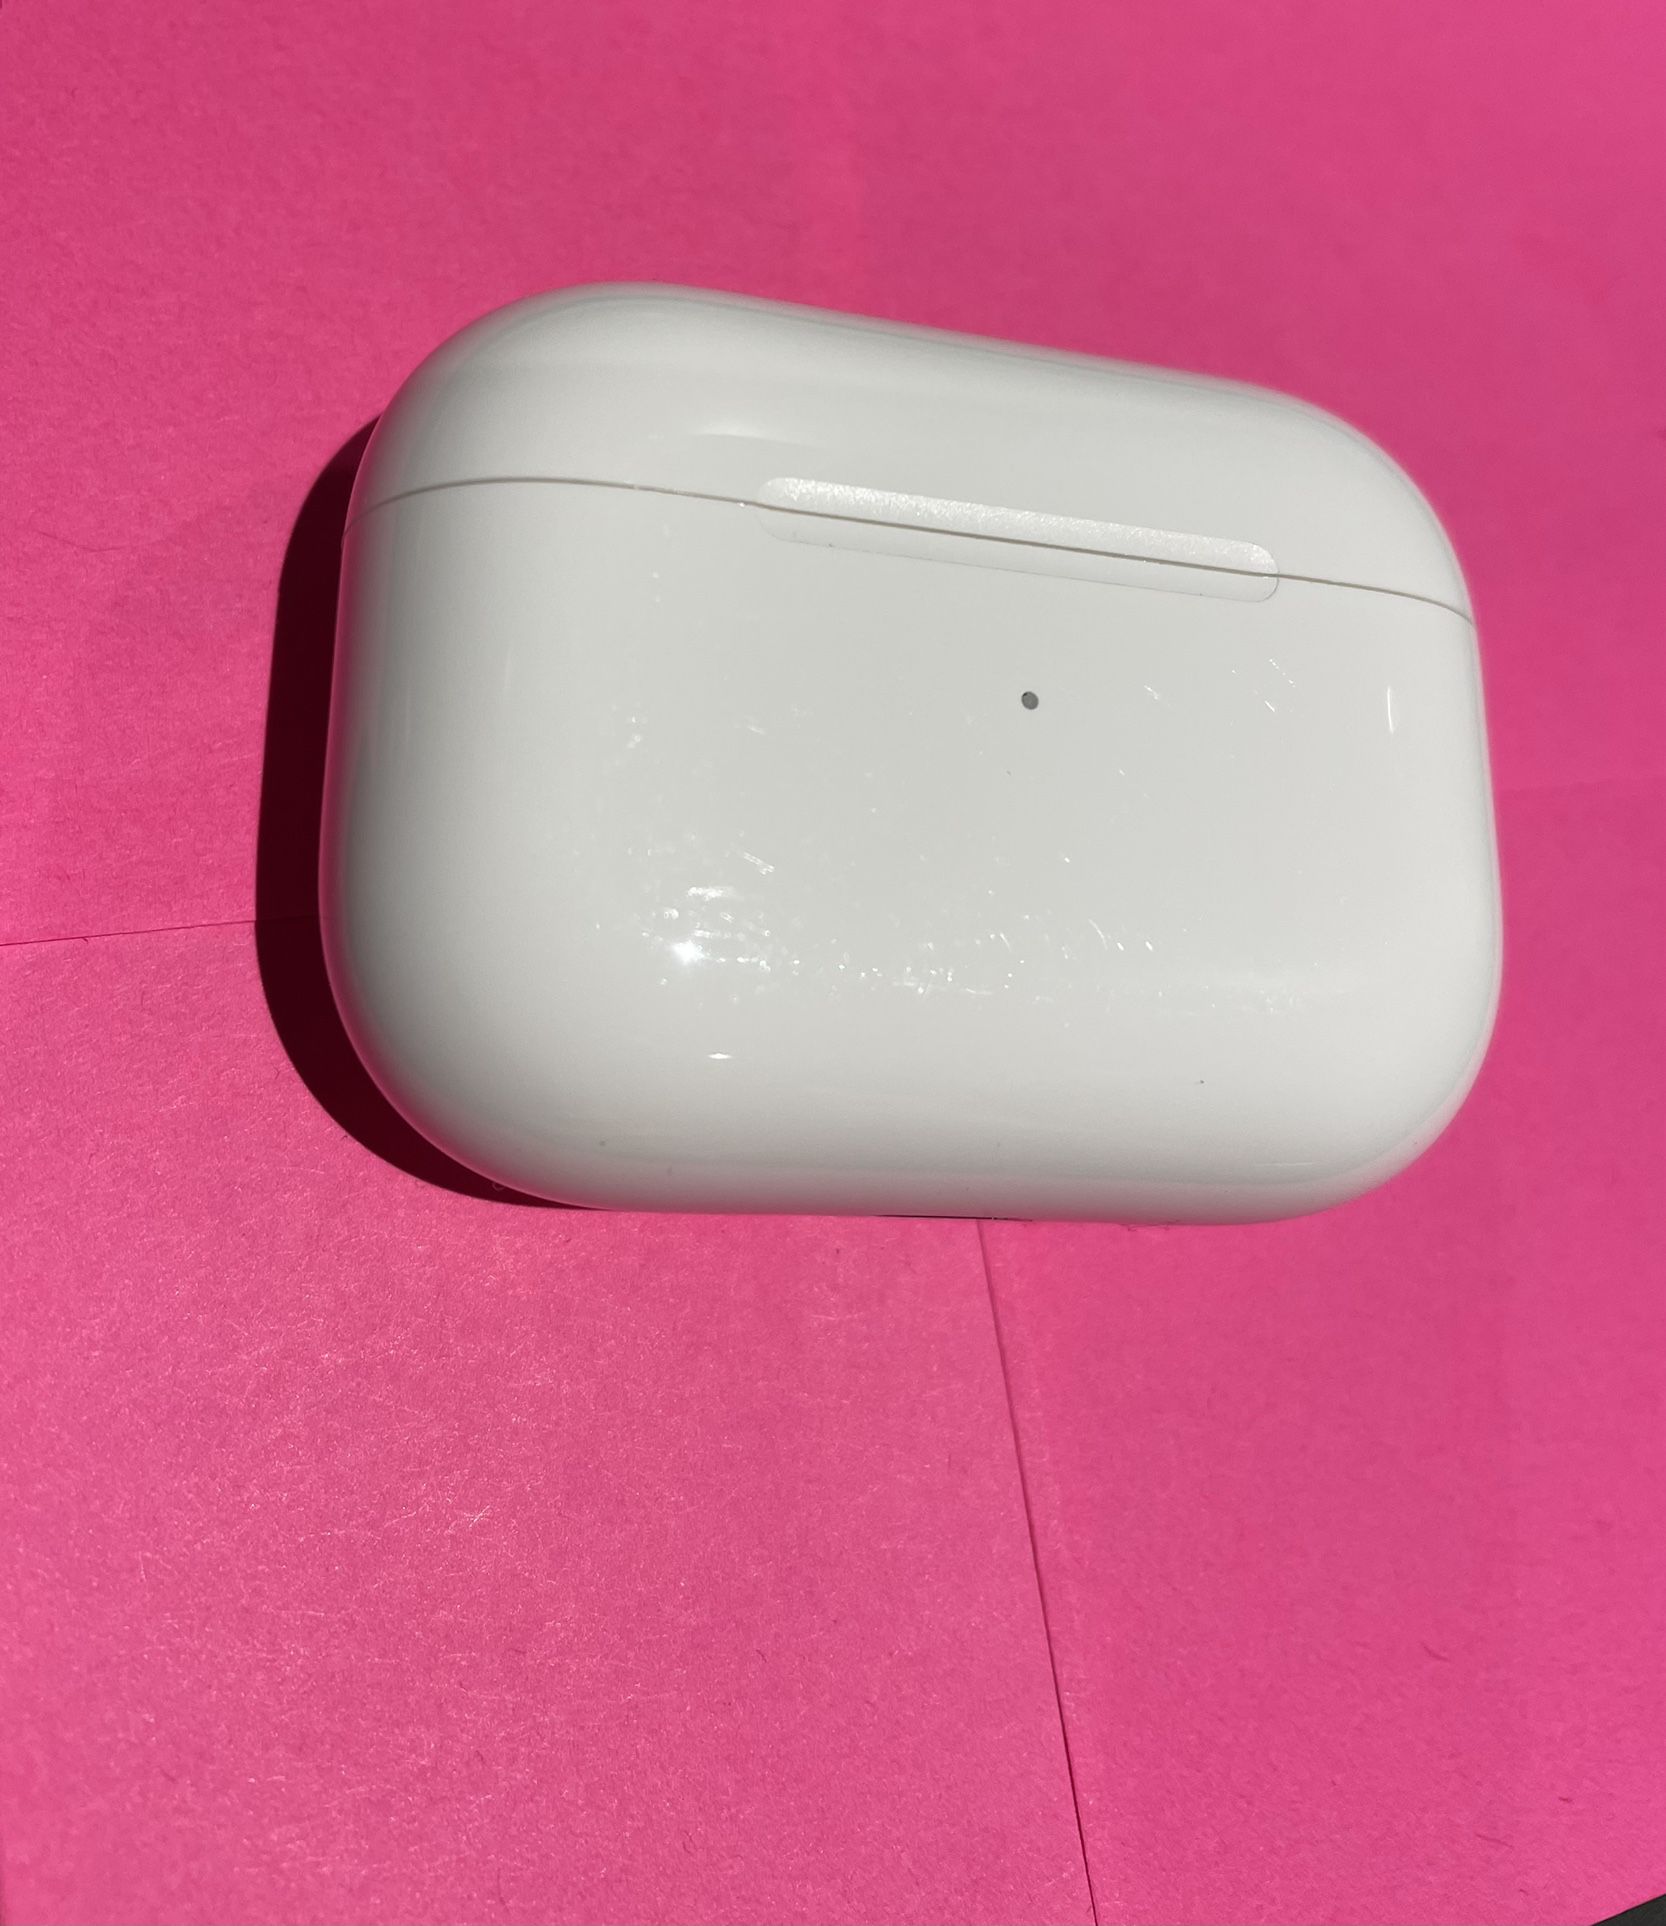 Apple Airpod Pro Charging Case